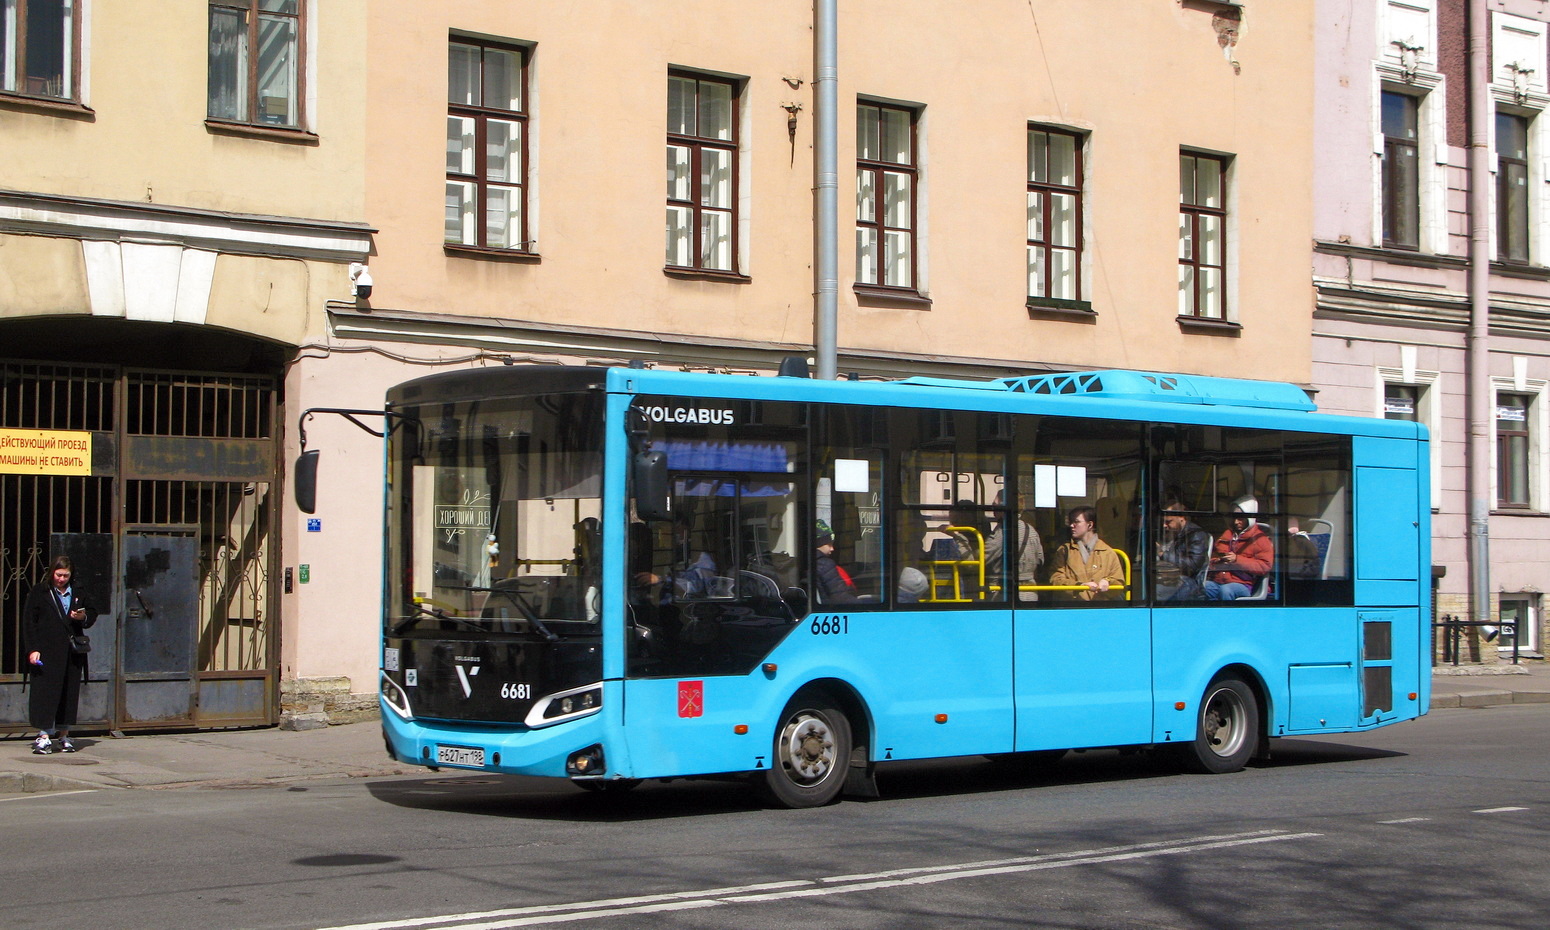 Saint Petersburg, Volgabus-4298.G4 (LNG) # 6681